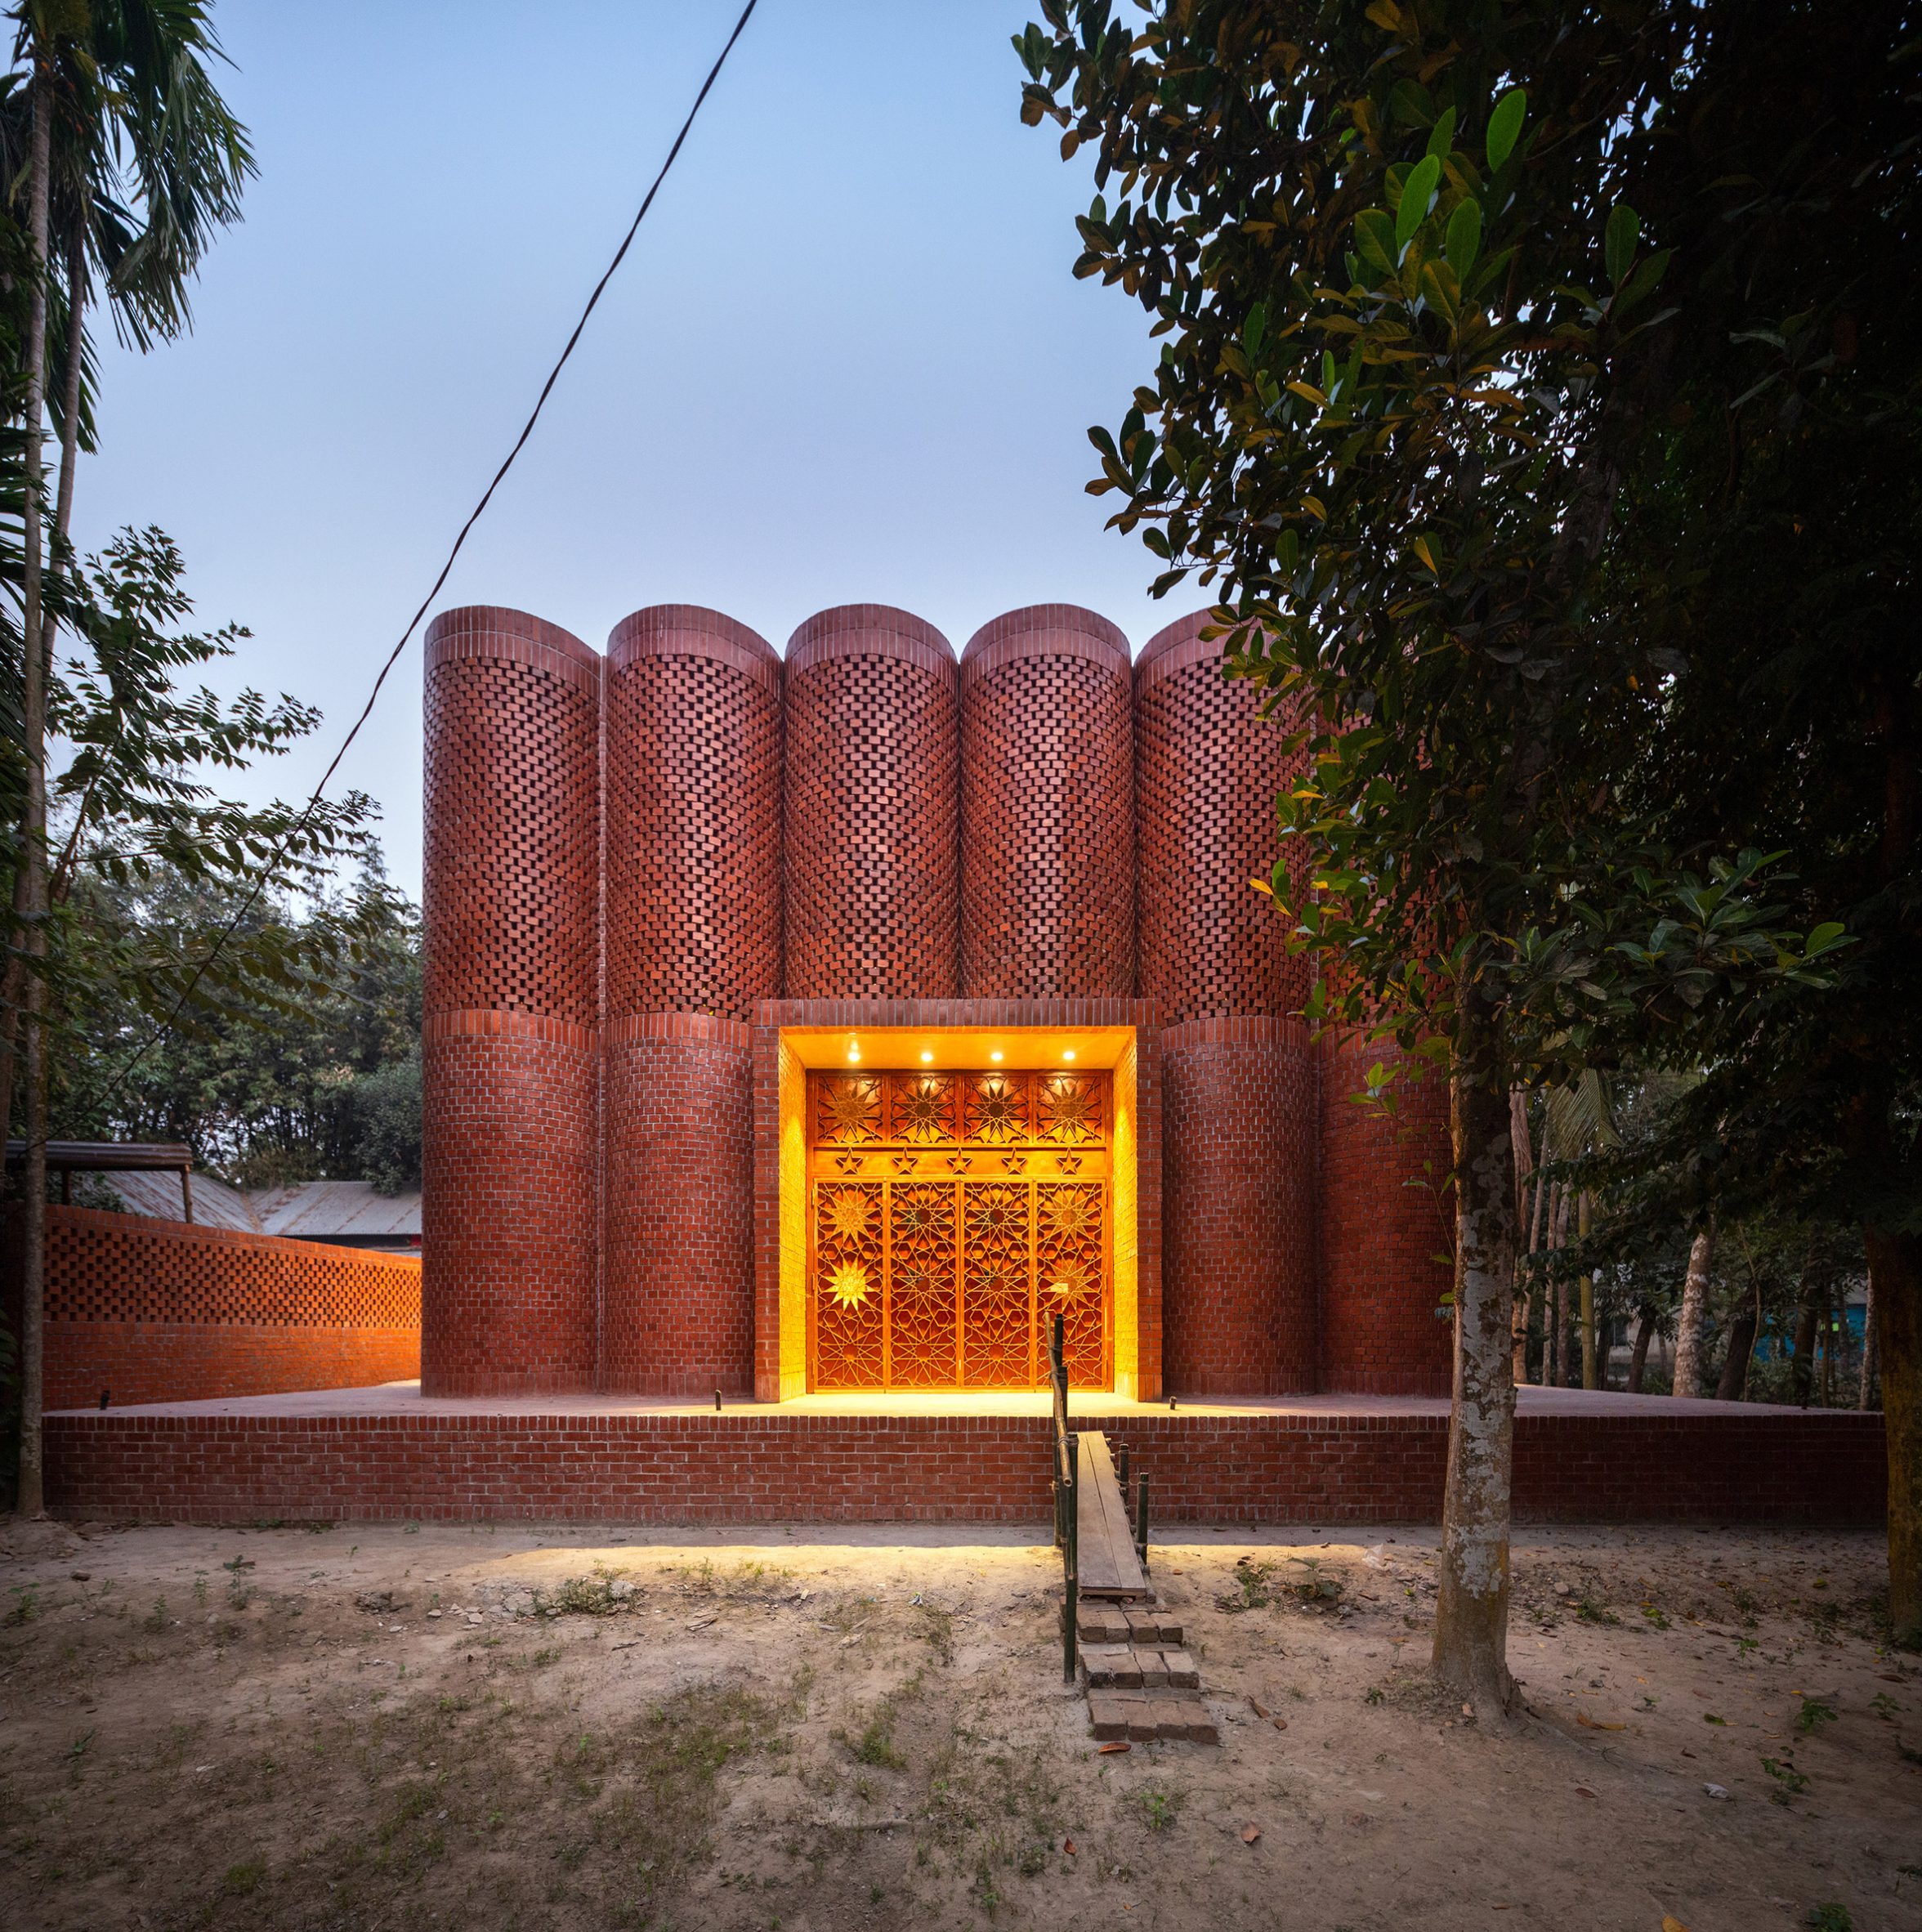 Entrance to Bangladesh mausoleum by Sthapotik